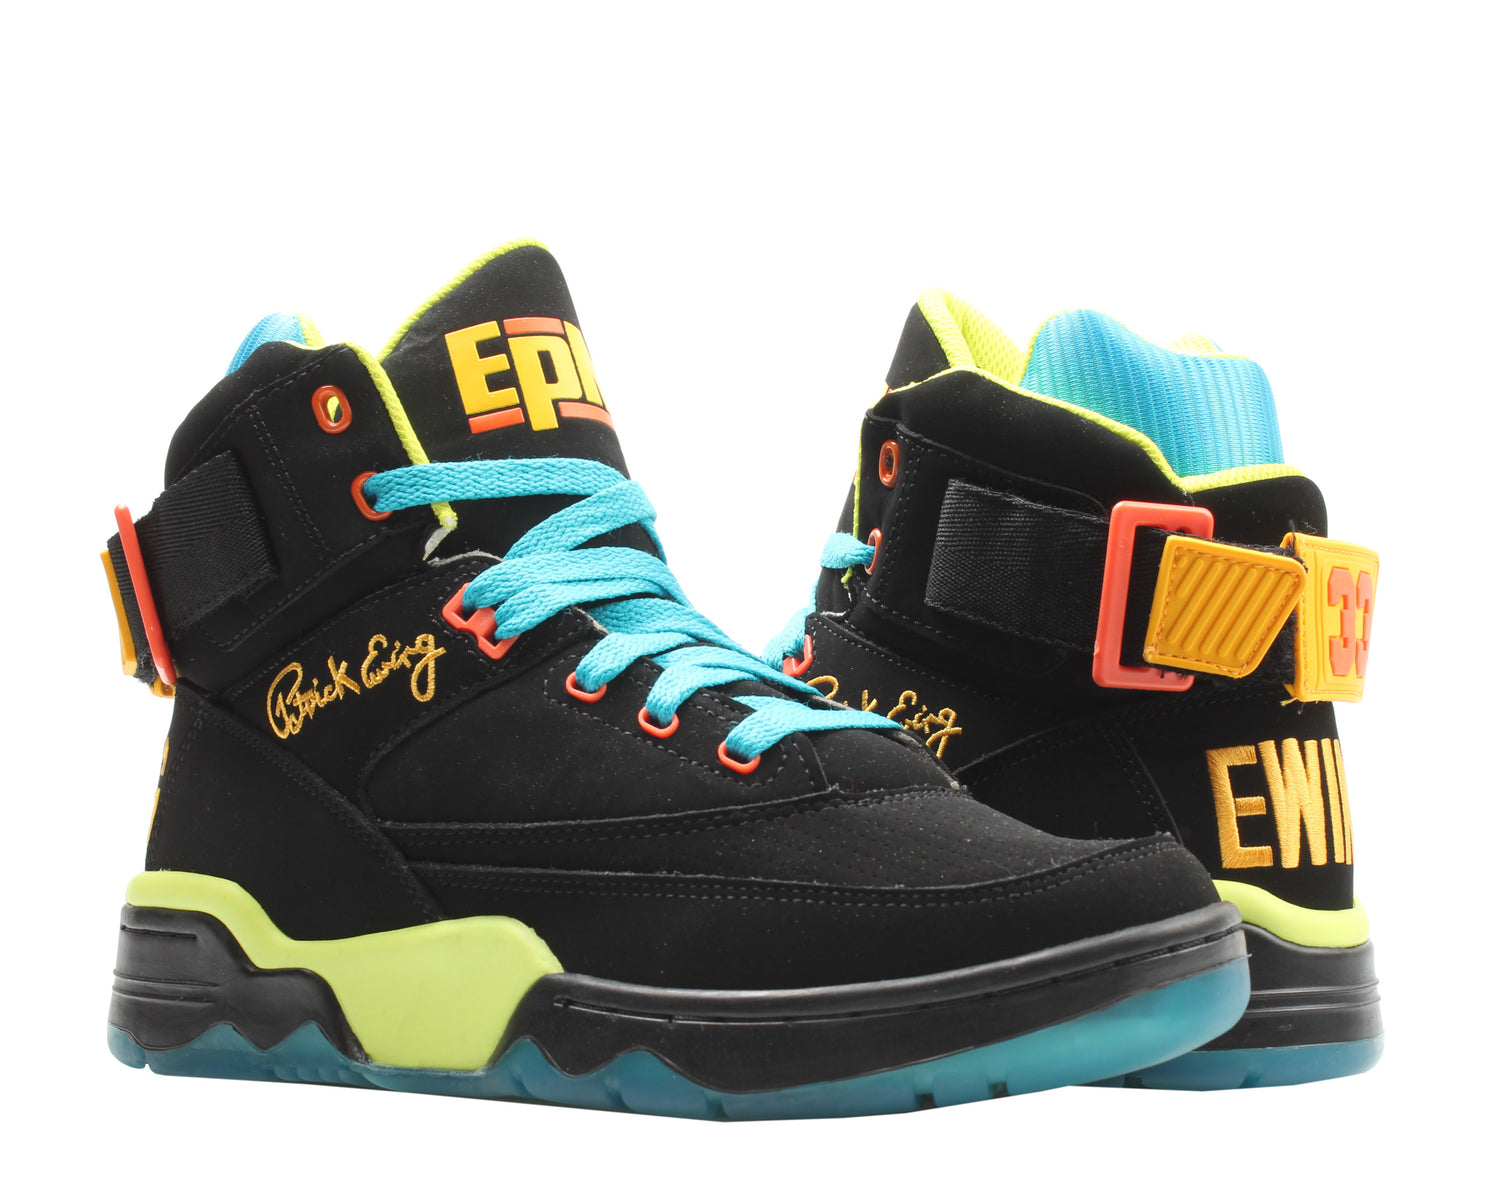 Ewing Athletics Ewing 33 Hi x EPMD Men's Basketball Shoes